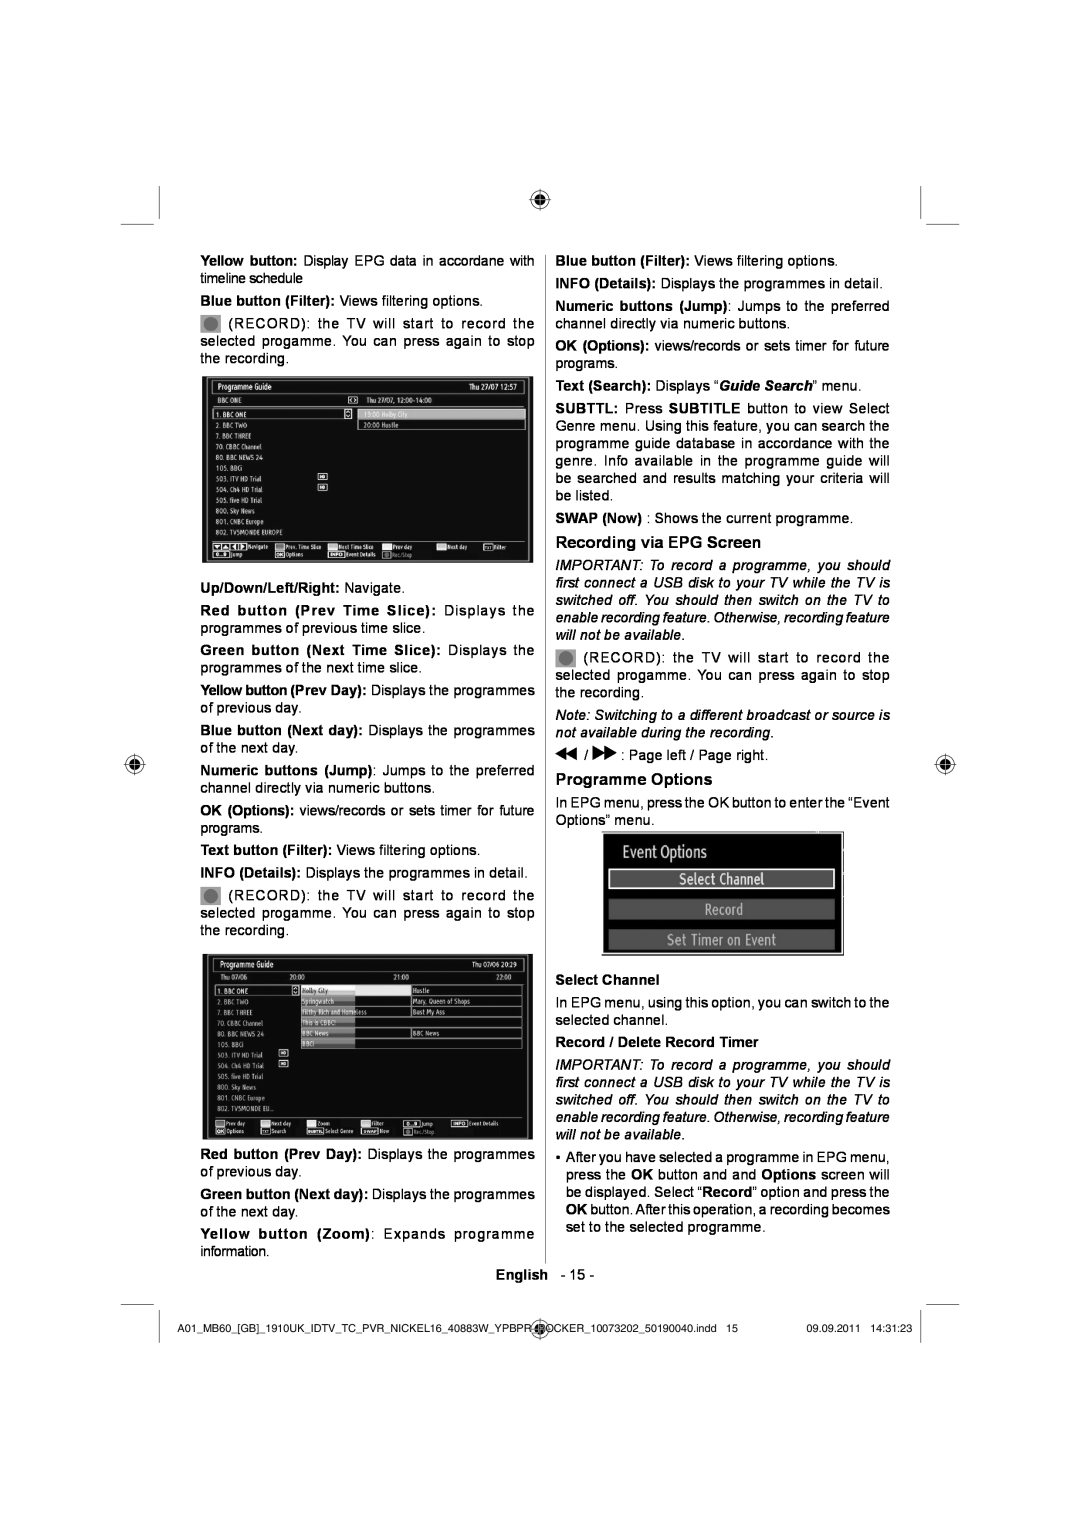 Sharp LC-40SH340E Recording via EPG Screen, Programme Options, Yellow button Zoom Expands programme information, English 